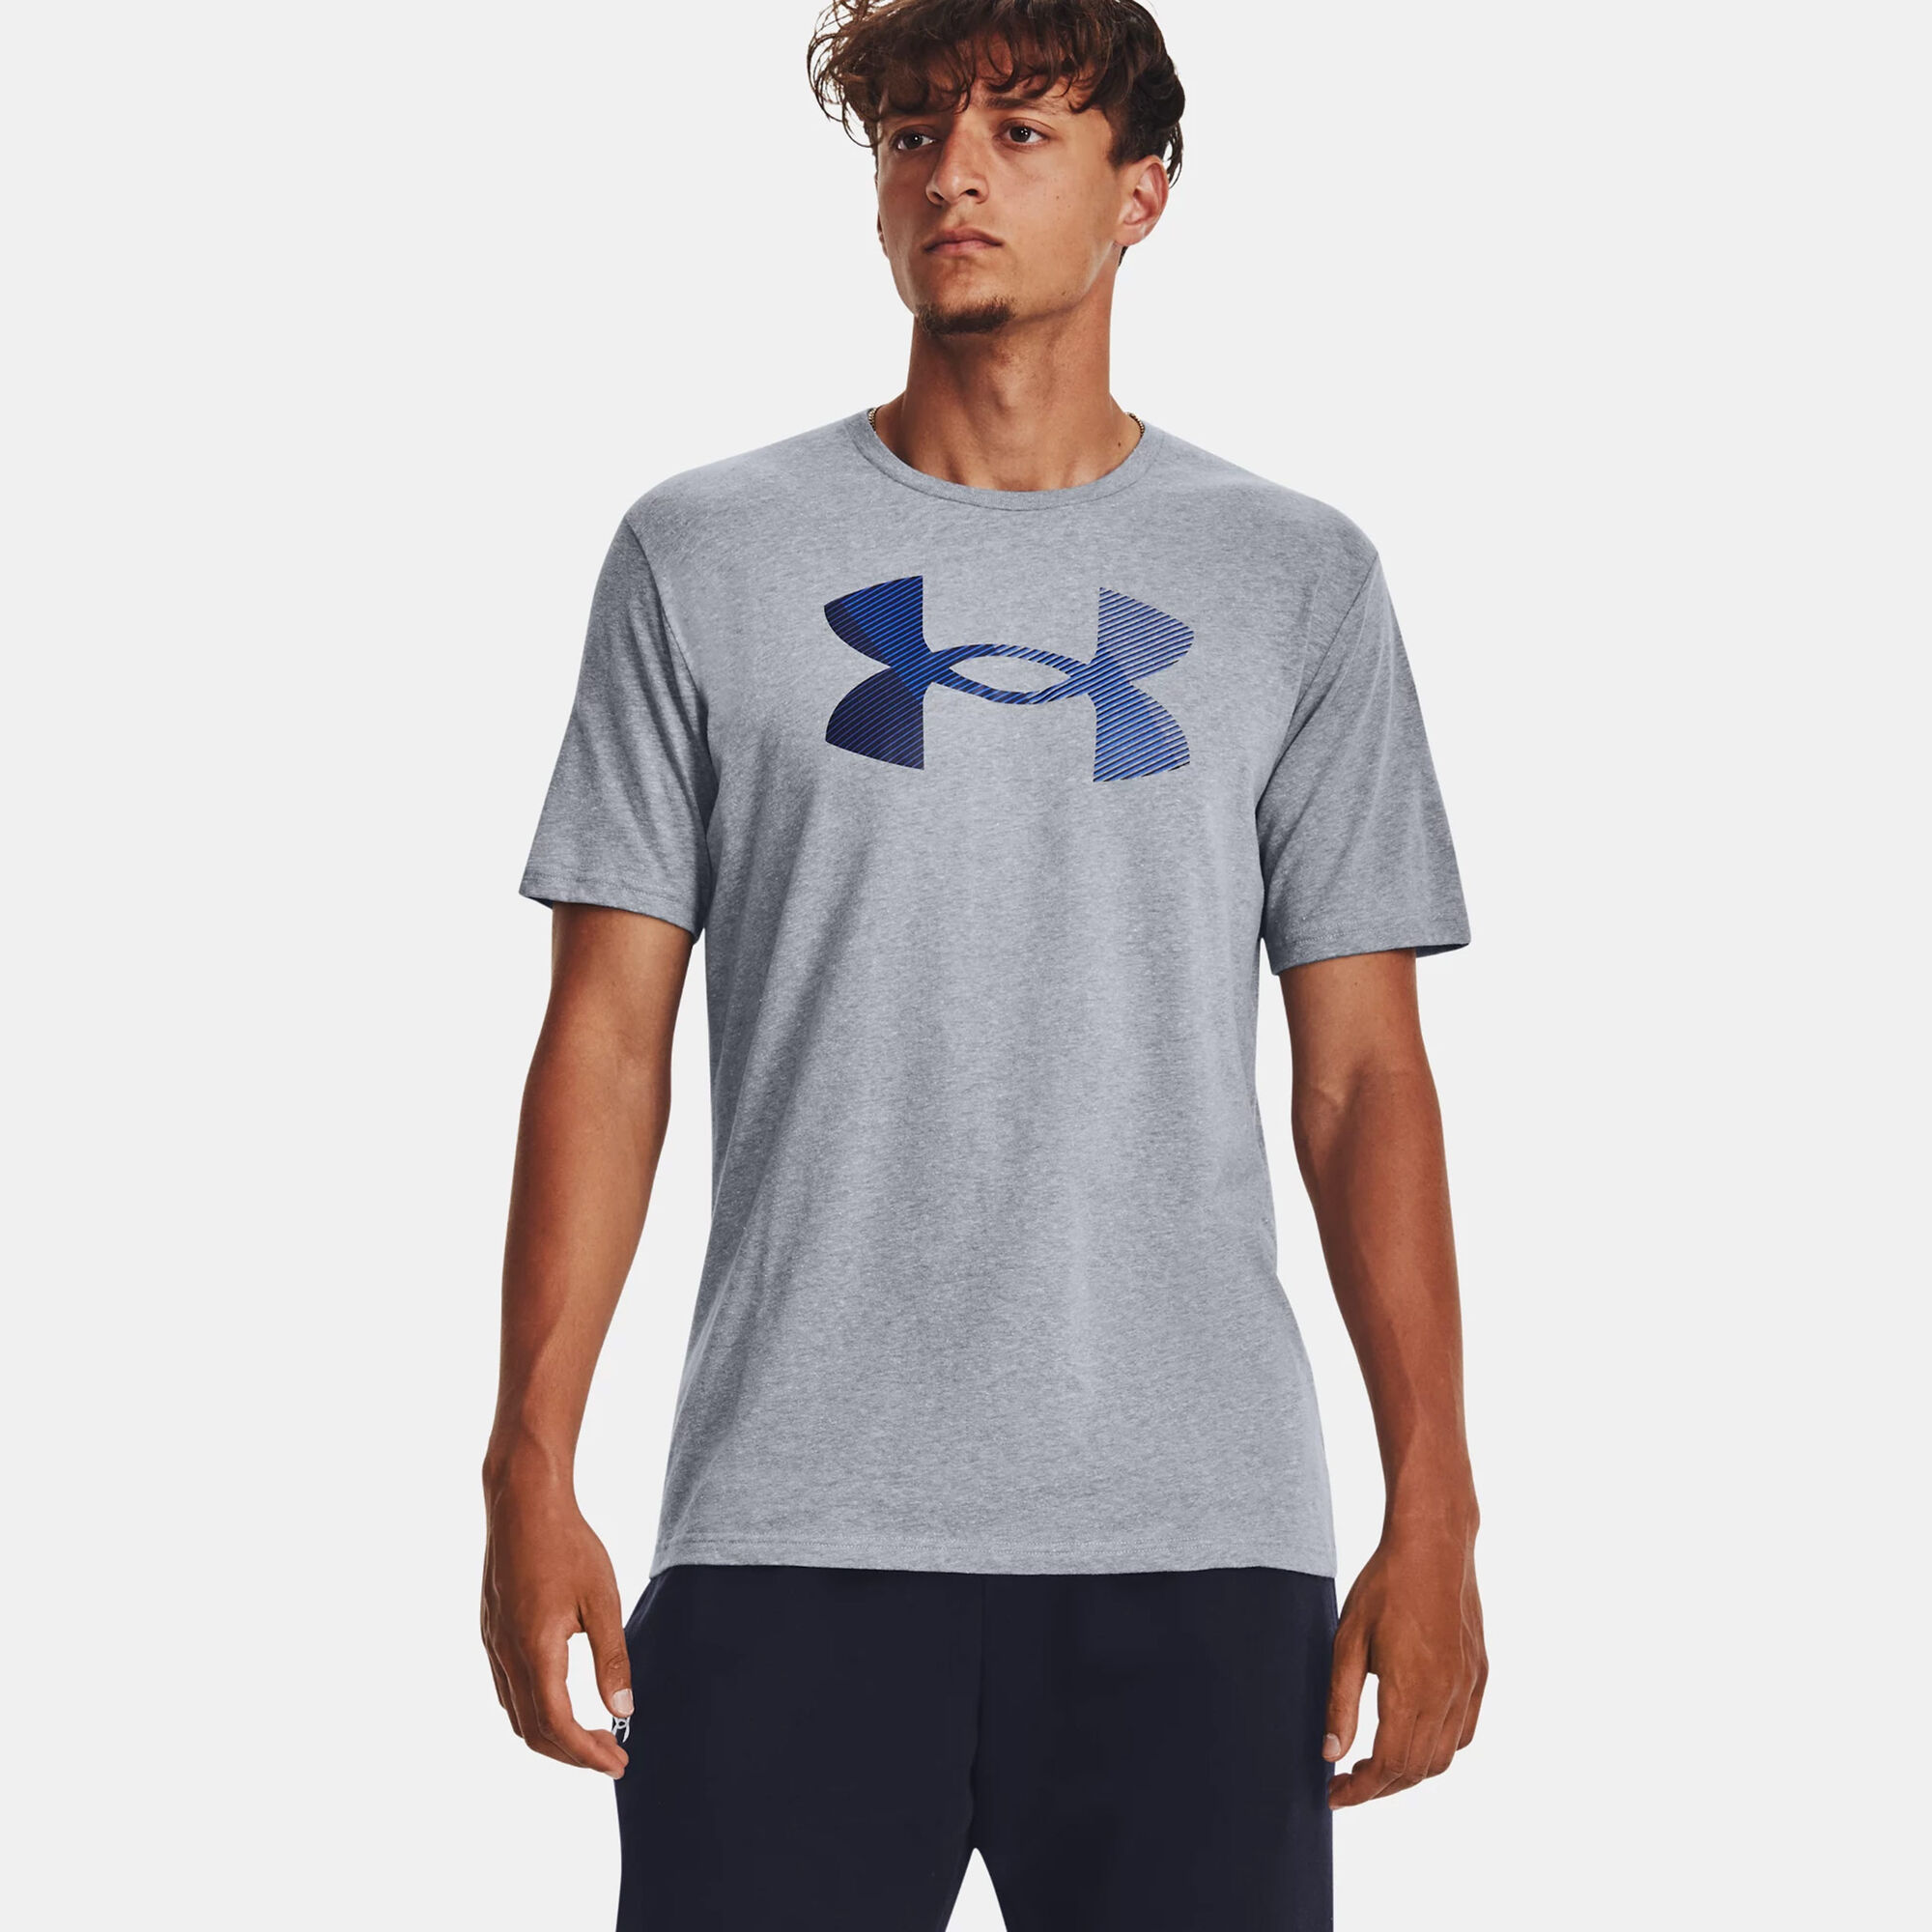 Buy Under Armour Big Logo Fill T-Shirt Men Grey, Blue online